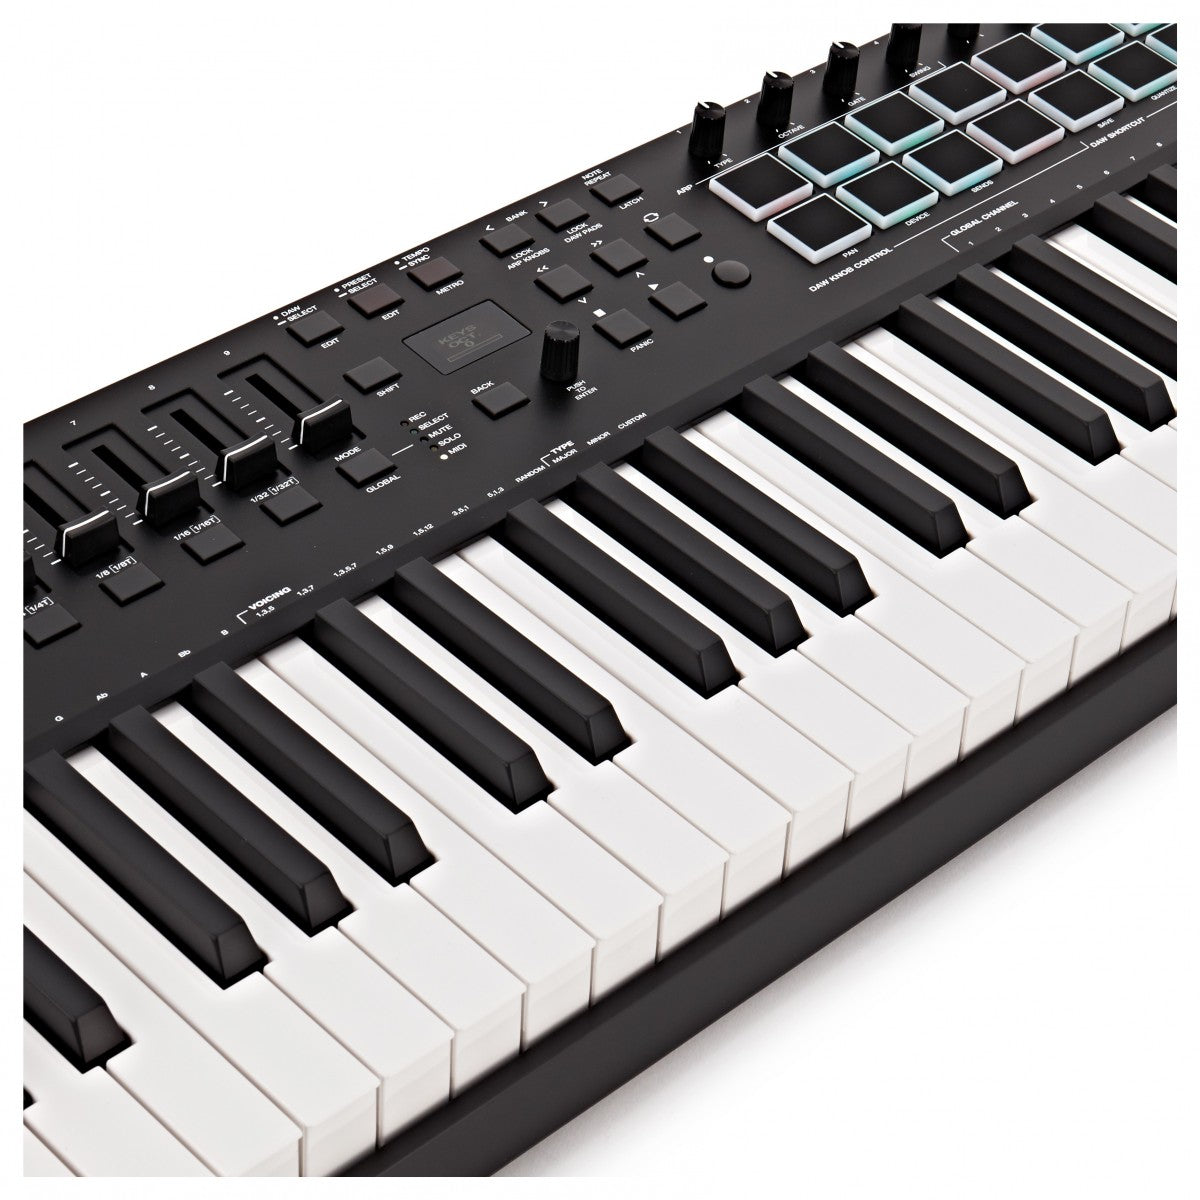 MIDI Keyboard Controller M-Audio Oxygen Pro 49